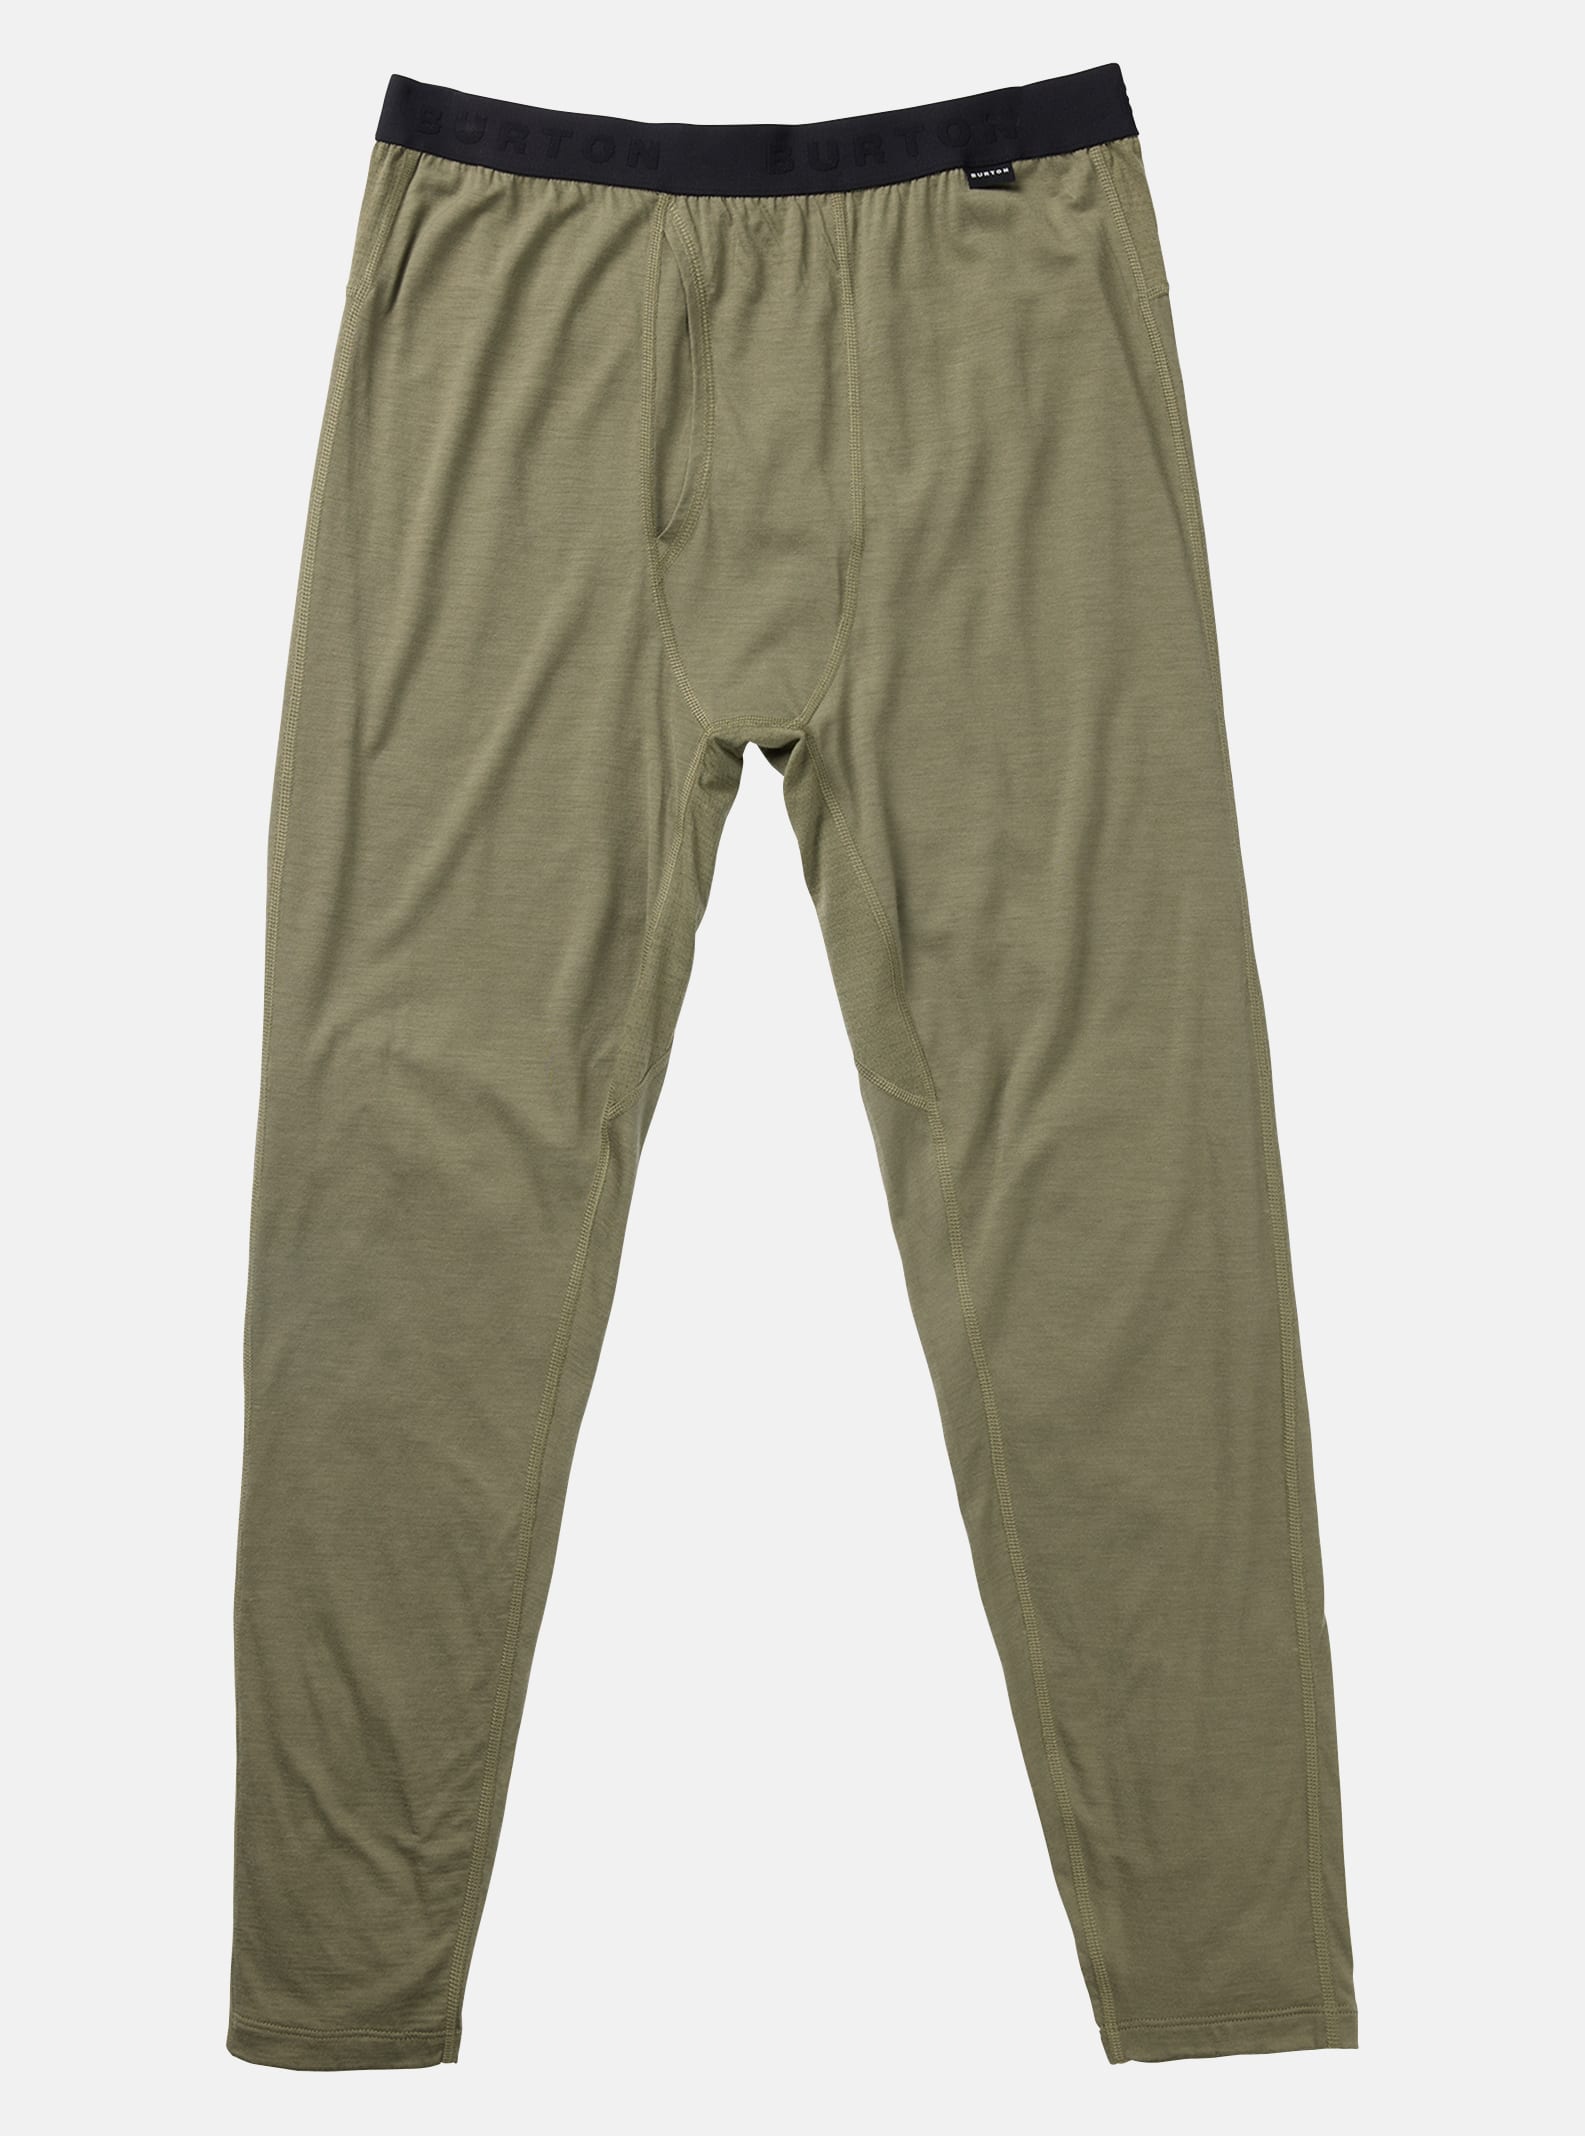 Burton Men's Phayse Merino Base Layer Pants, Forest Moss, L